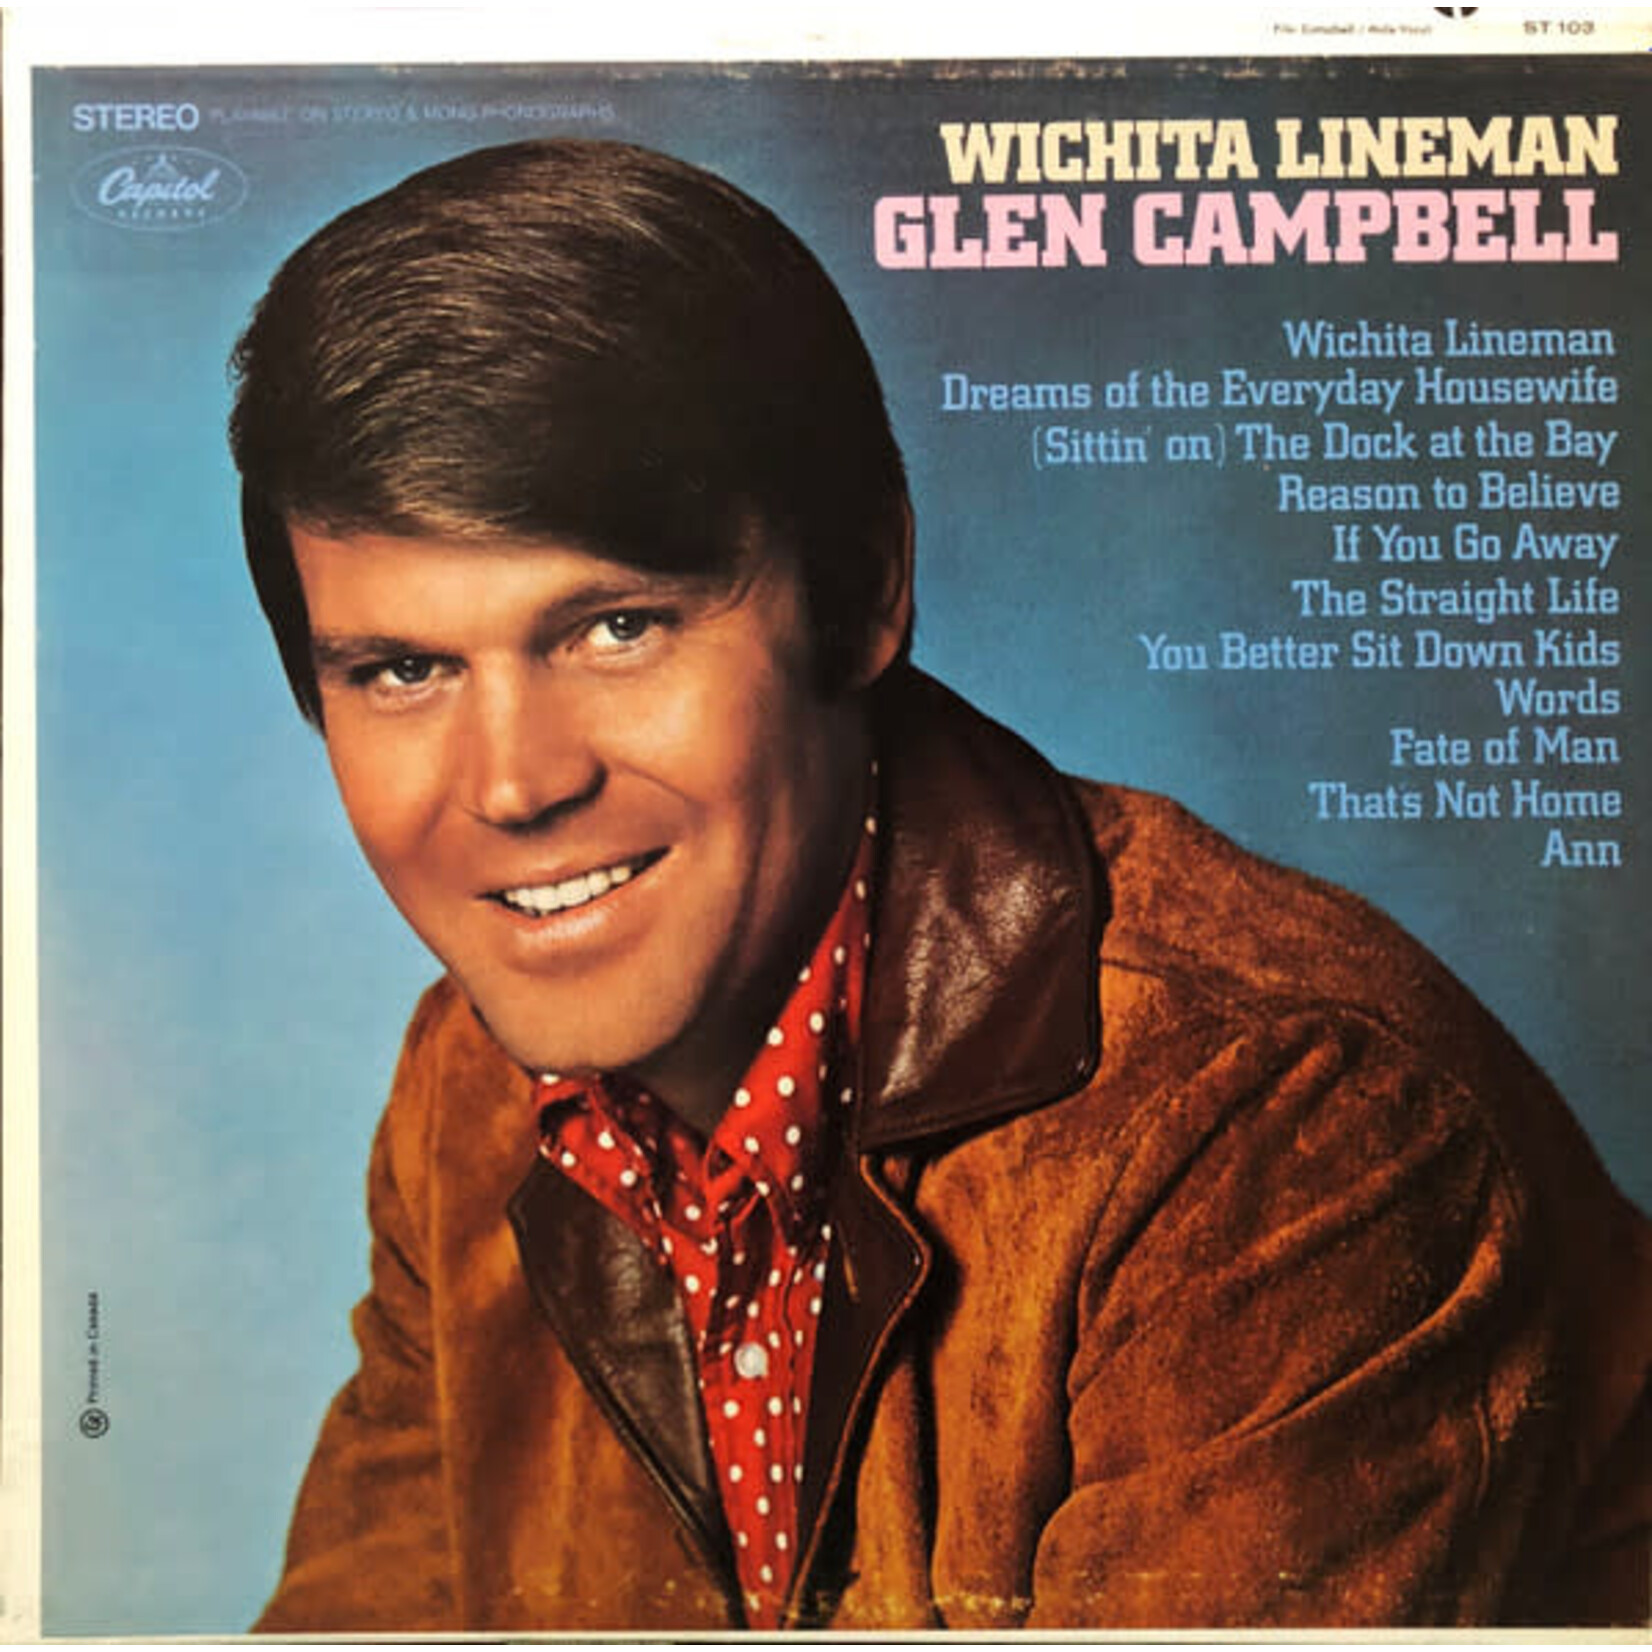 Glen Campbell Glen Campbell – Wichita Lineman (VG, 1968, LP, Capitol Records – ST-103)